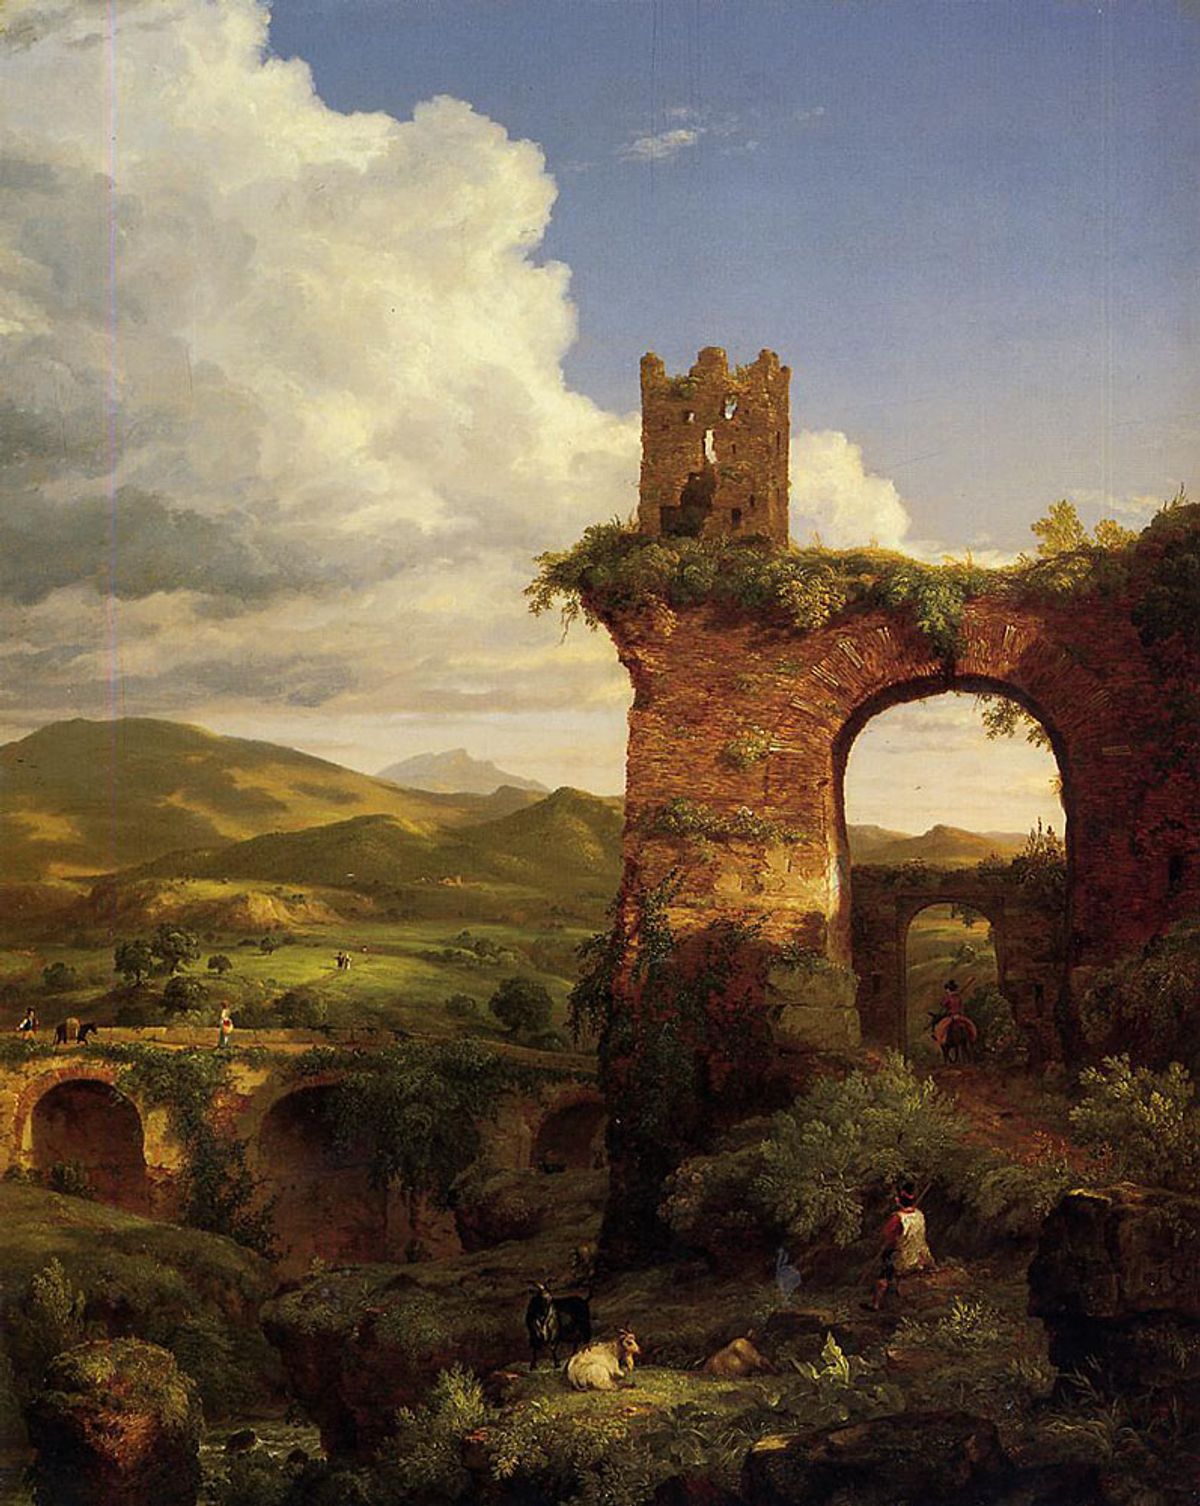 Thomas Cole's The Arch of Nero (1846) 